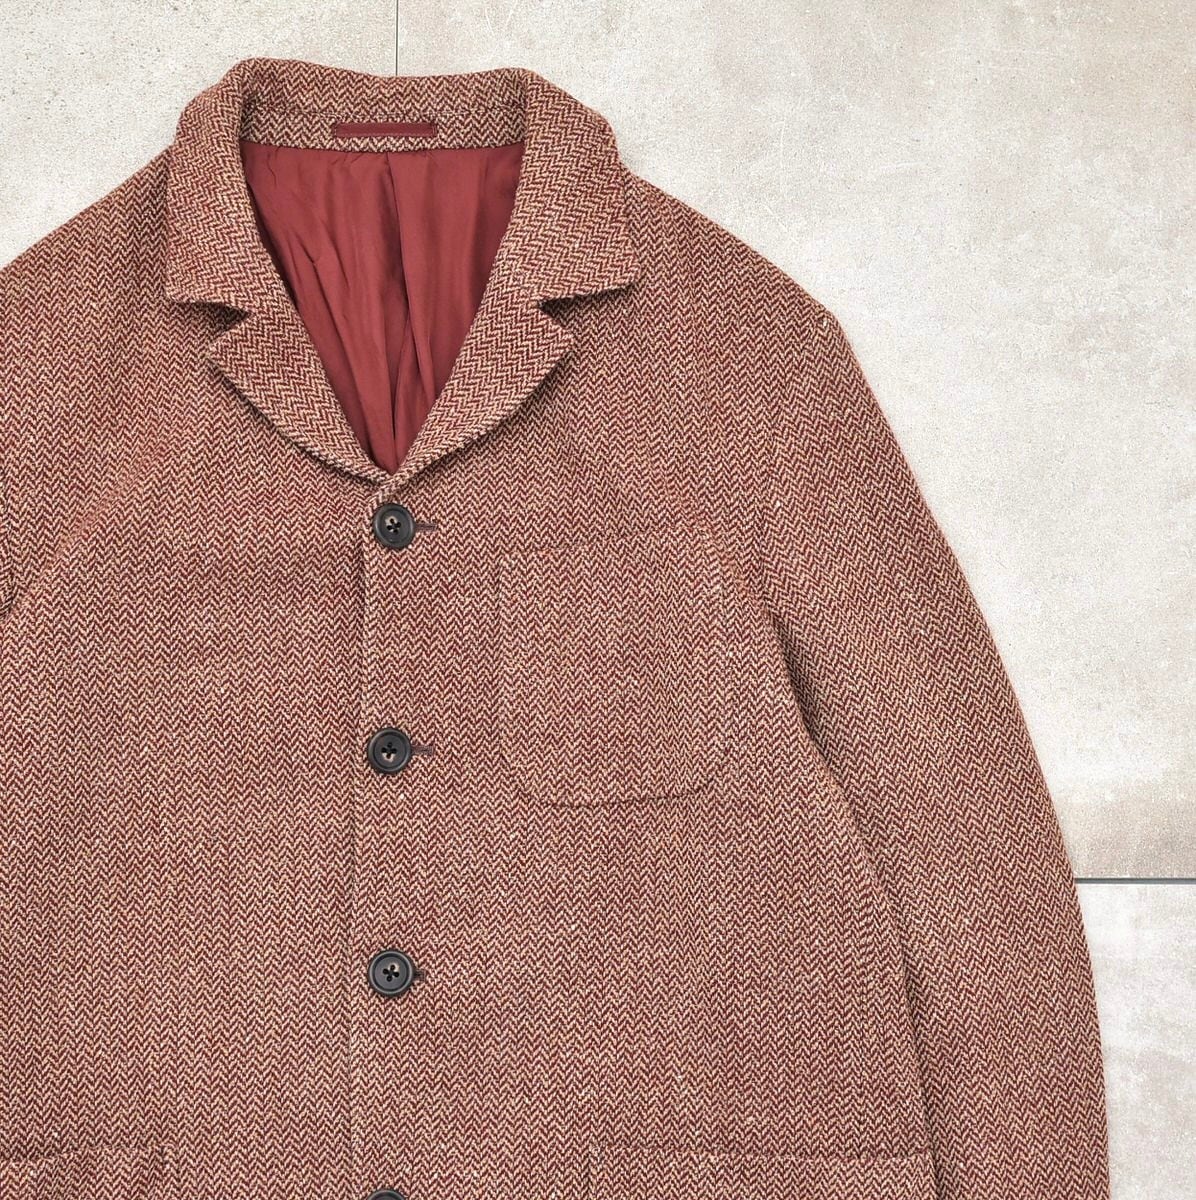 Herringbone tweed classic design jacket